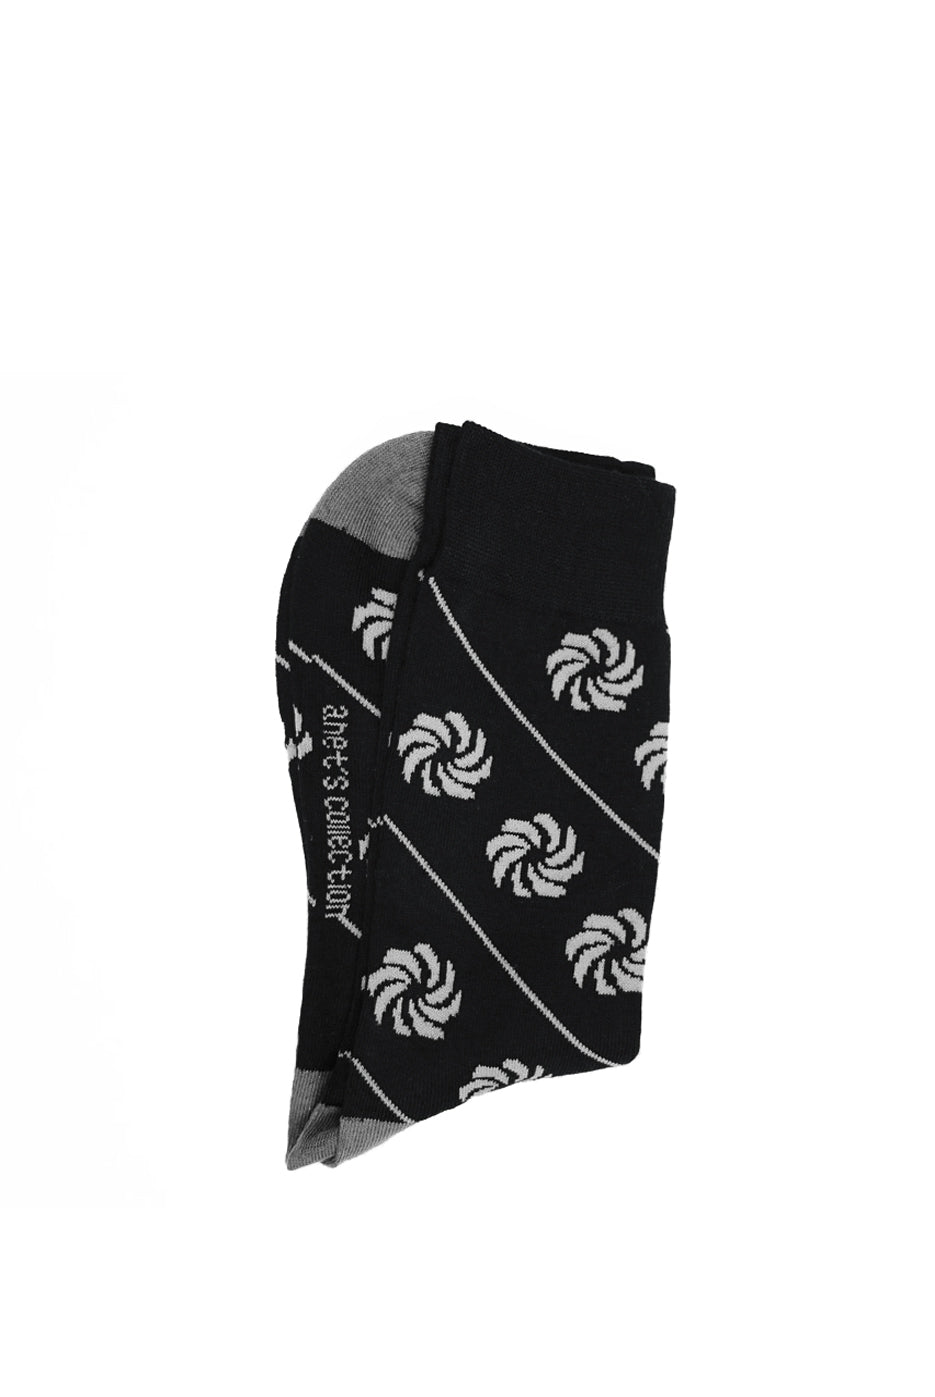 Eternity Print Socks - black folded